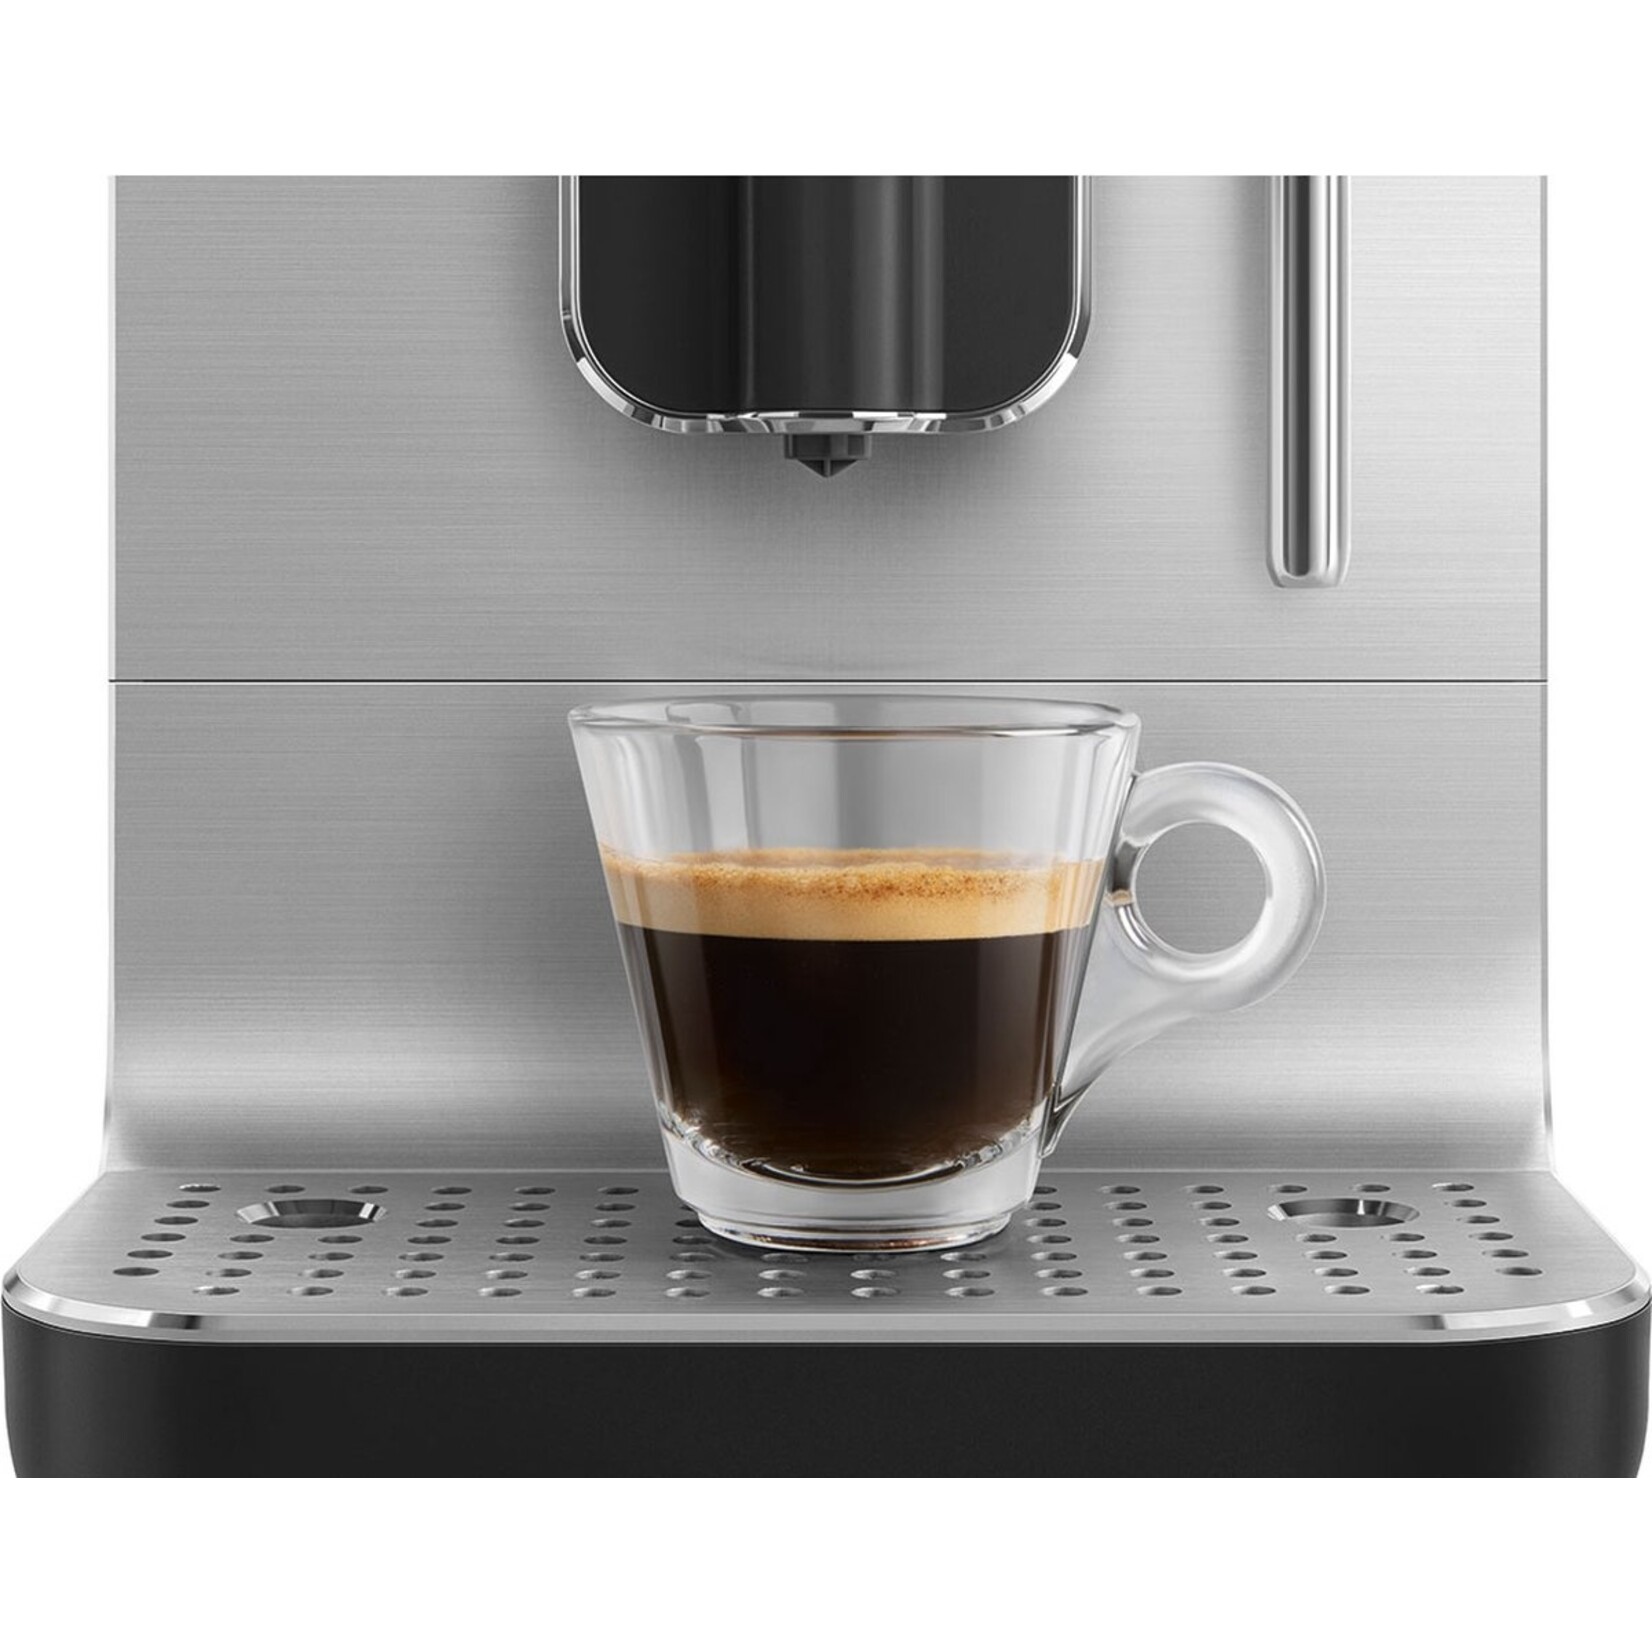 SMEG SMEG espressomachine medium, mat zwart, met stoomfunctie, BCC12BLMEU